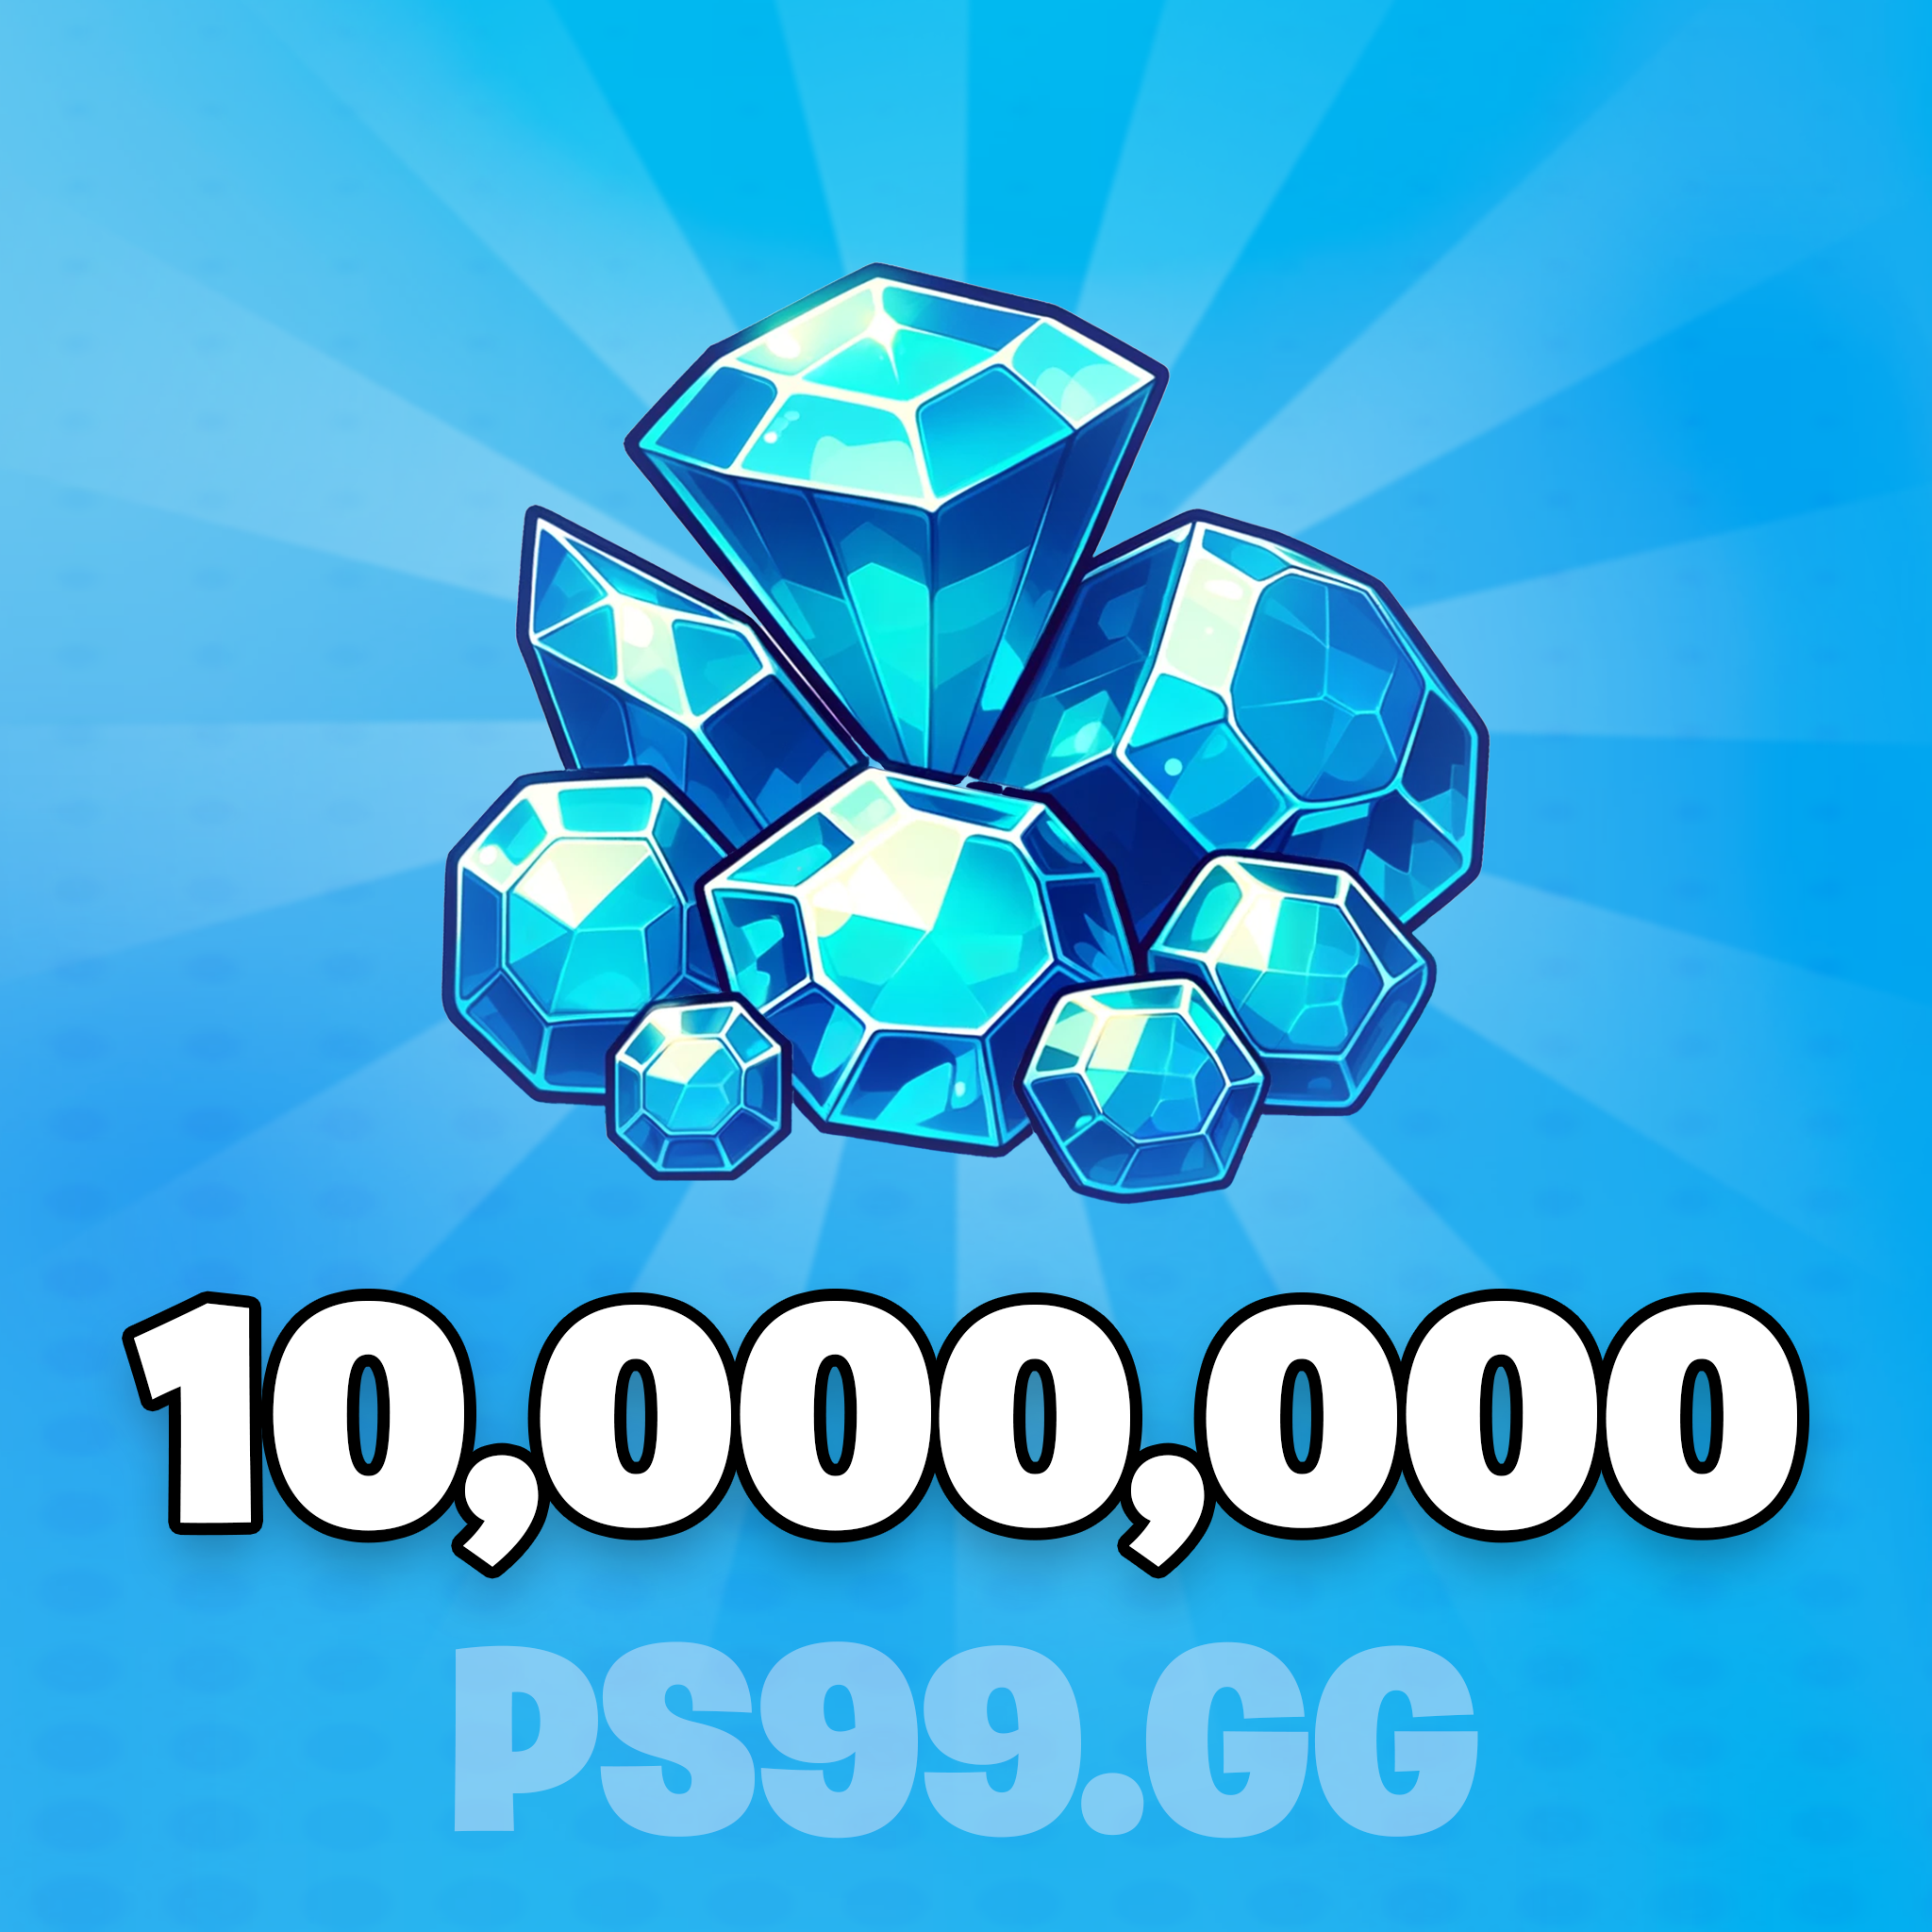 PS99 Gems - 10 Million